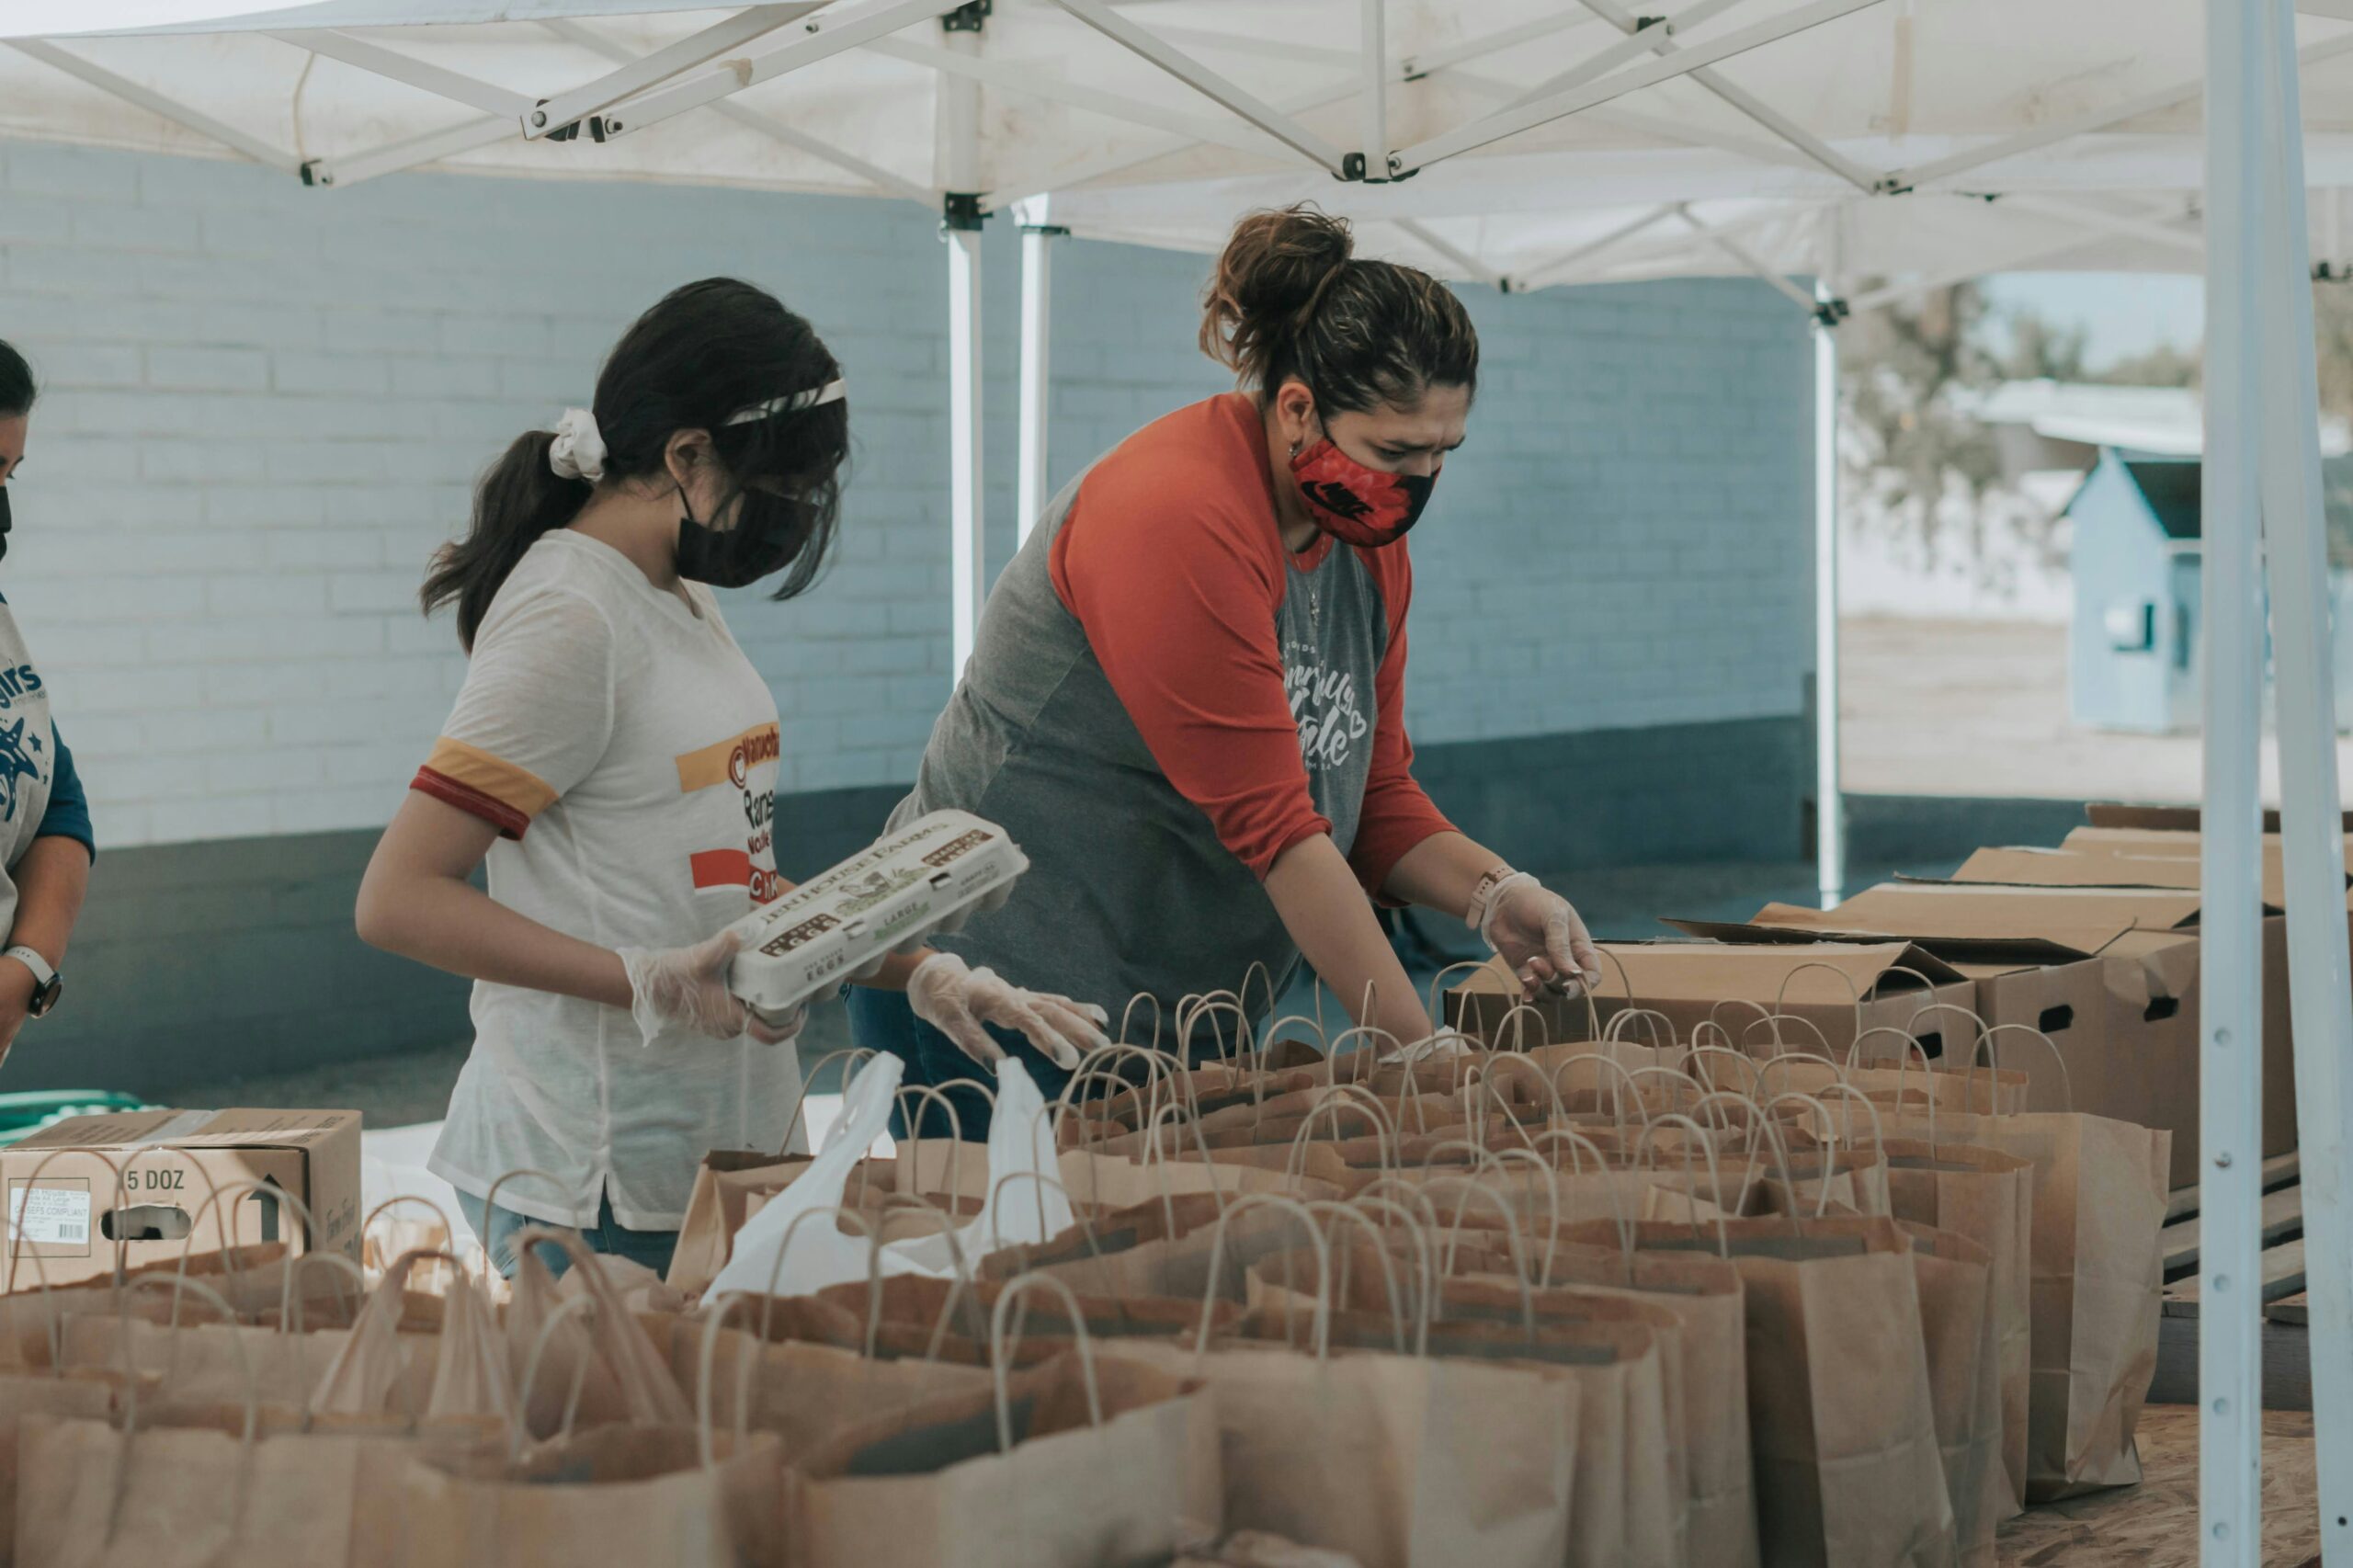 Two volunteers packing food into brown paper bags